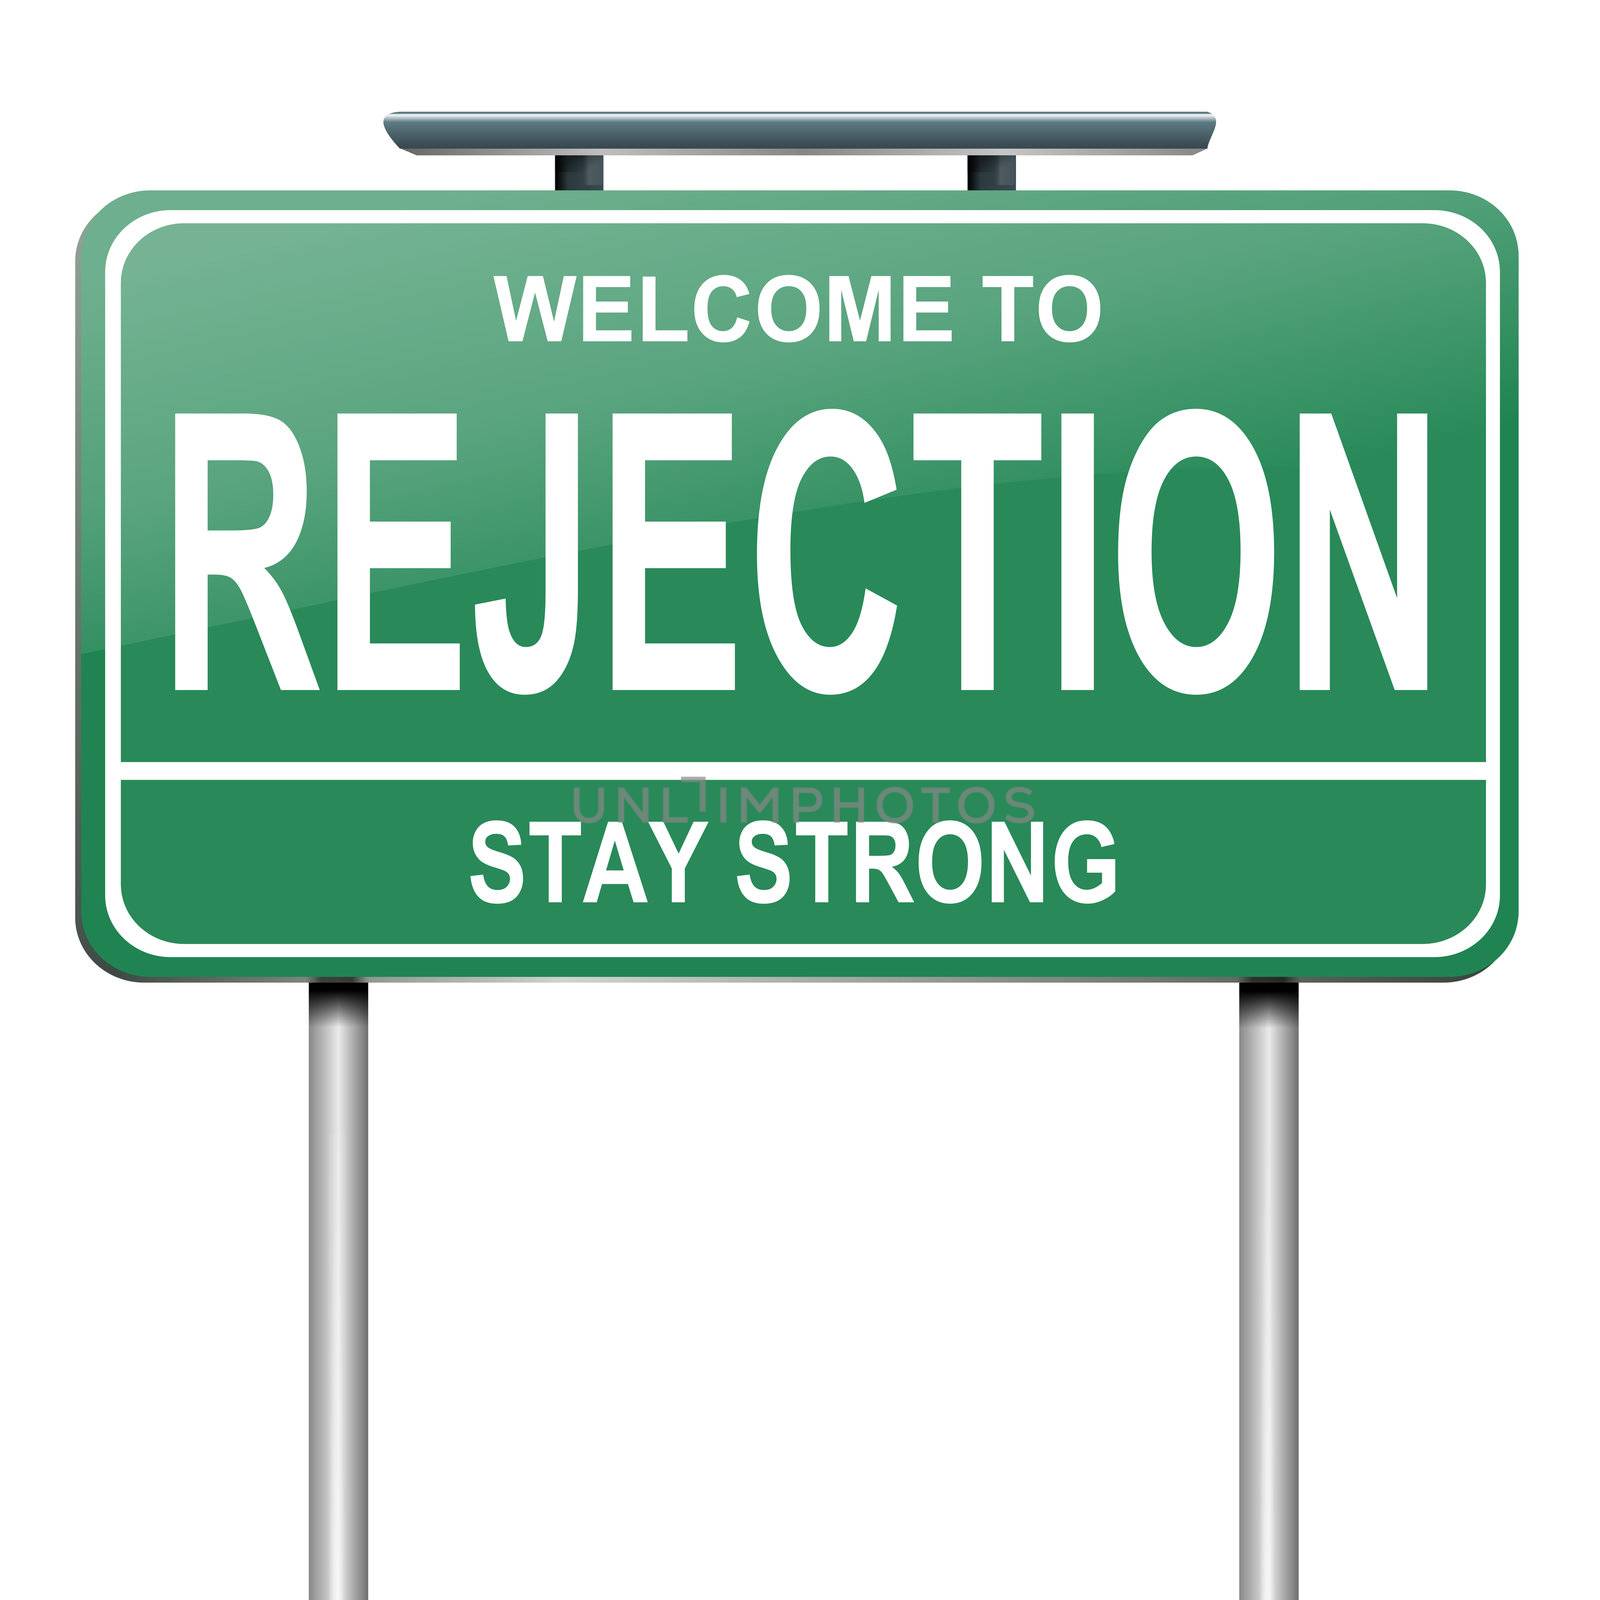 Rejection concept. by 72soul